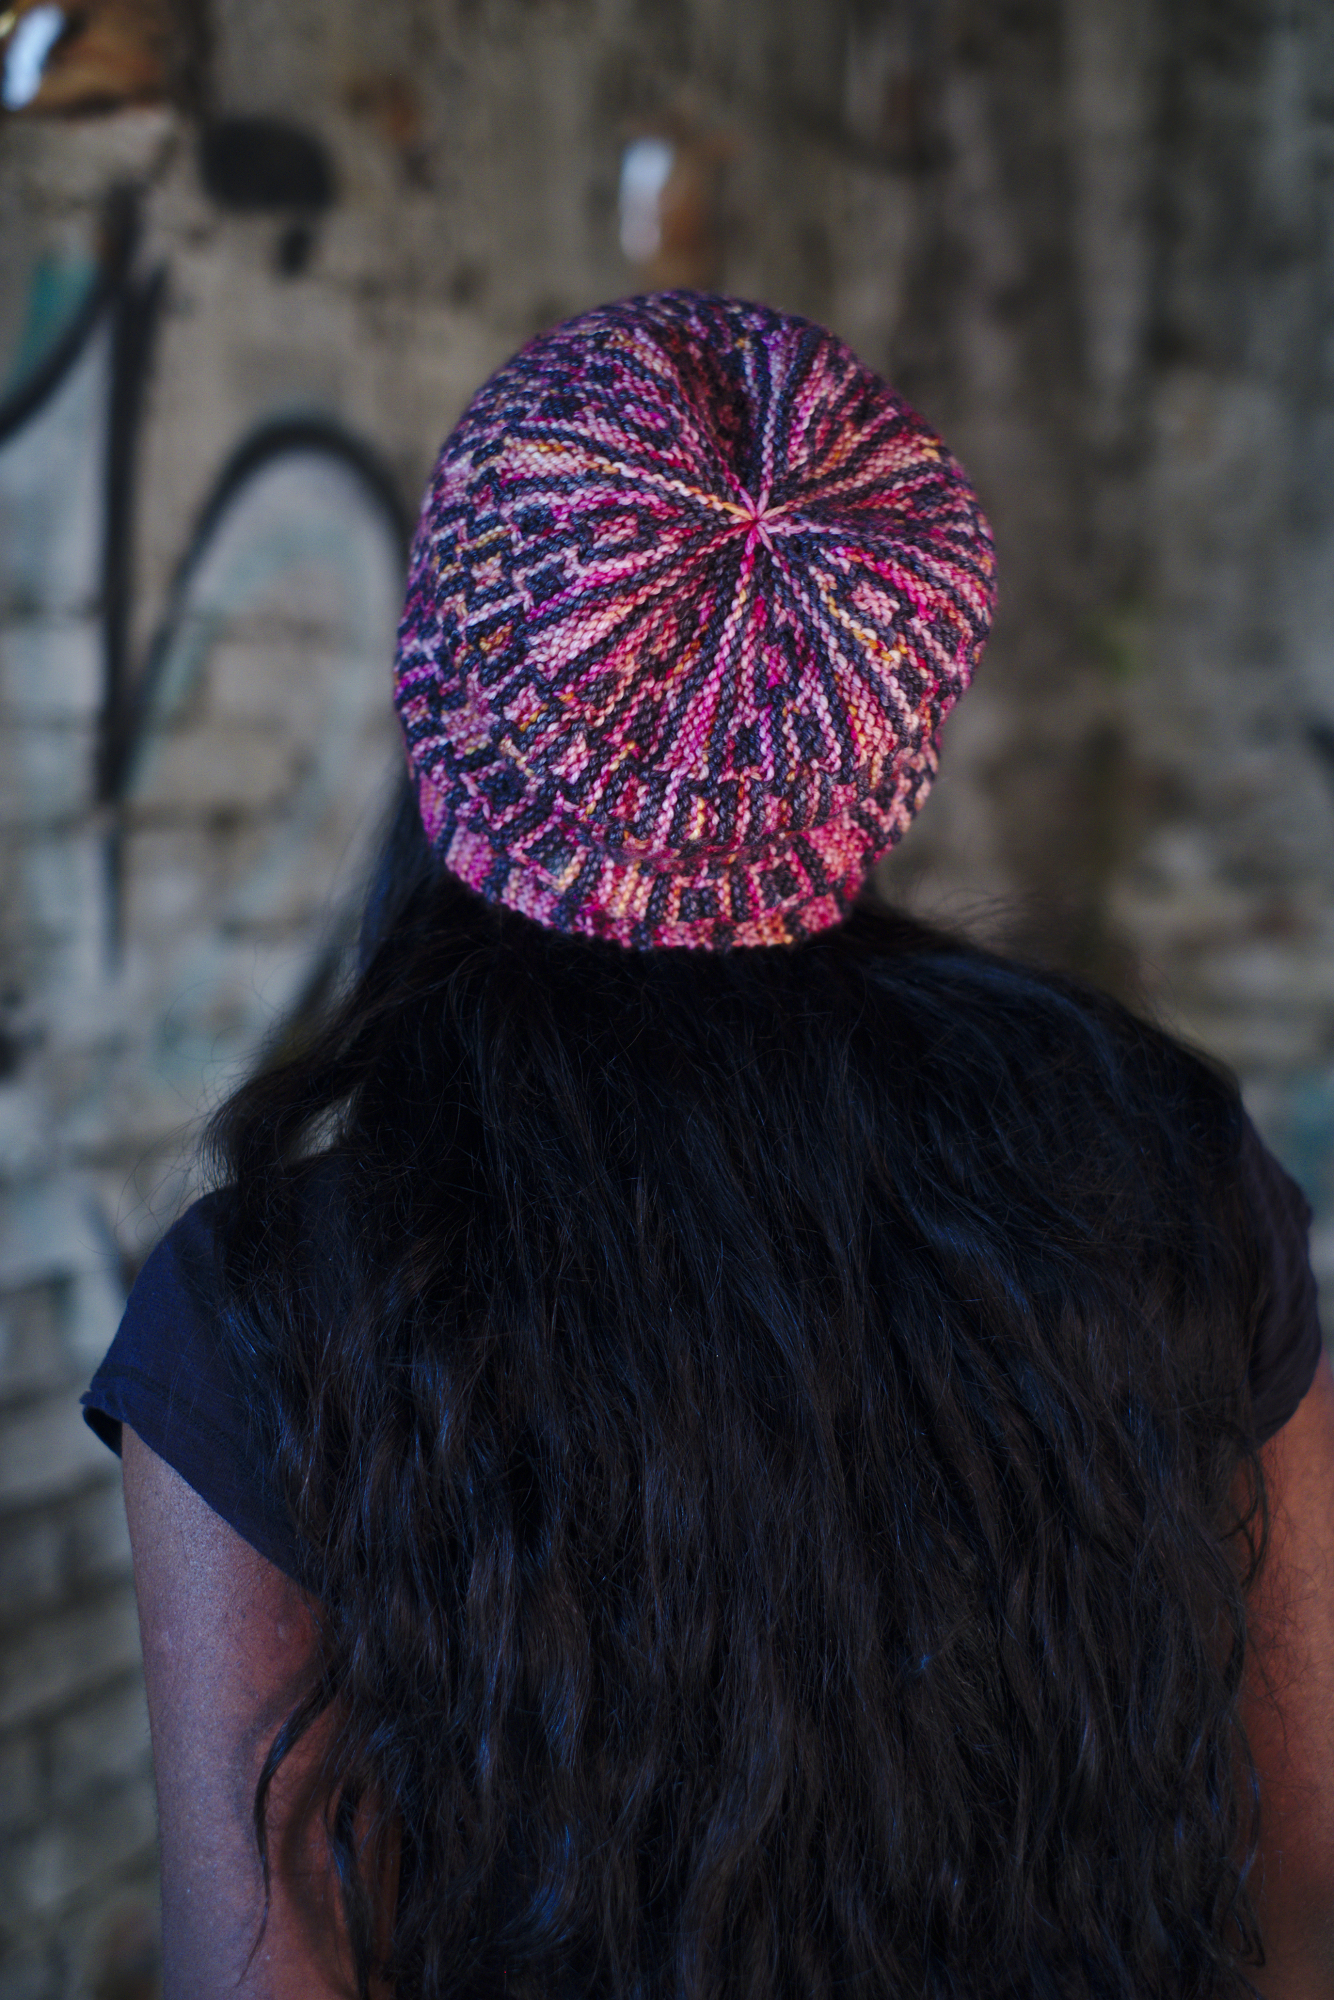 Downtown sideways knit mosaic hat knitting pattern for dk weight yarn